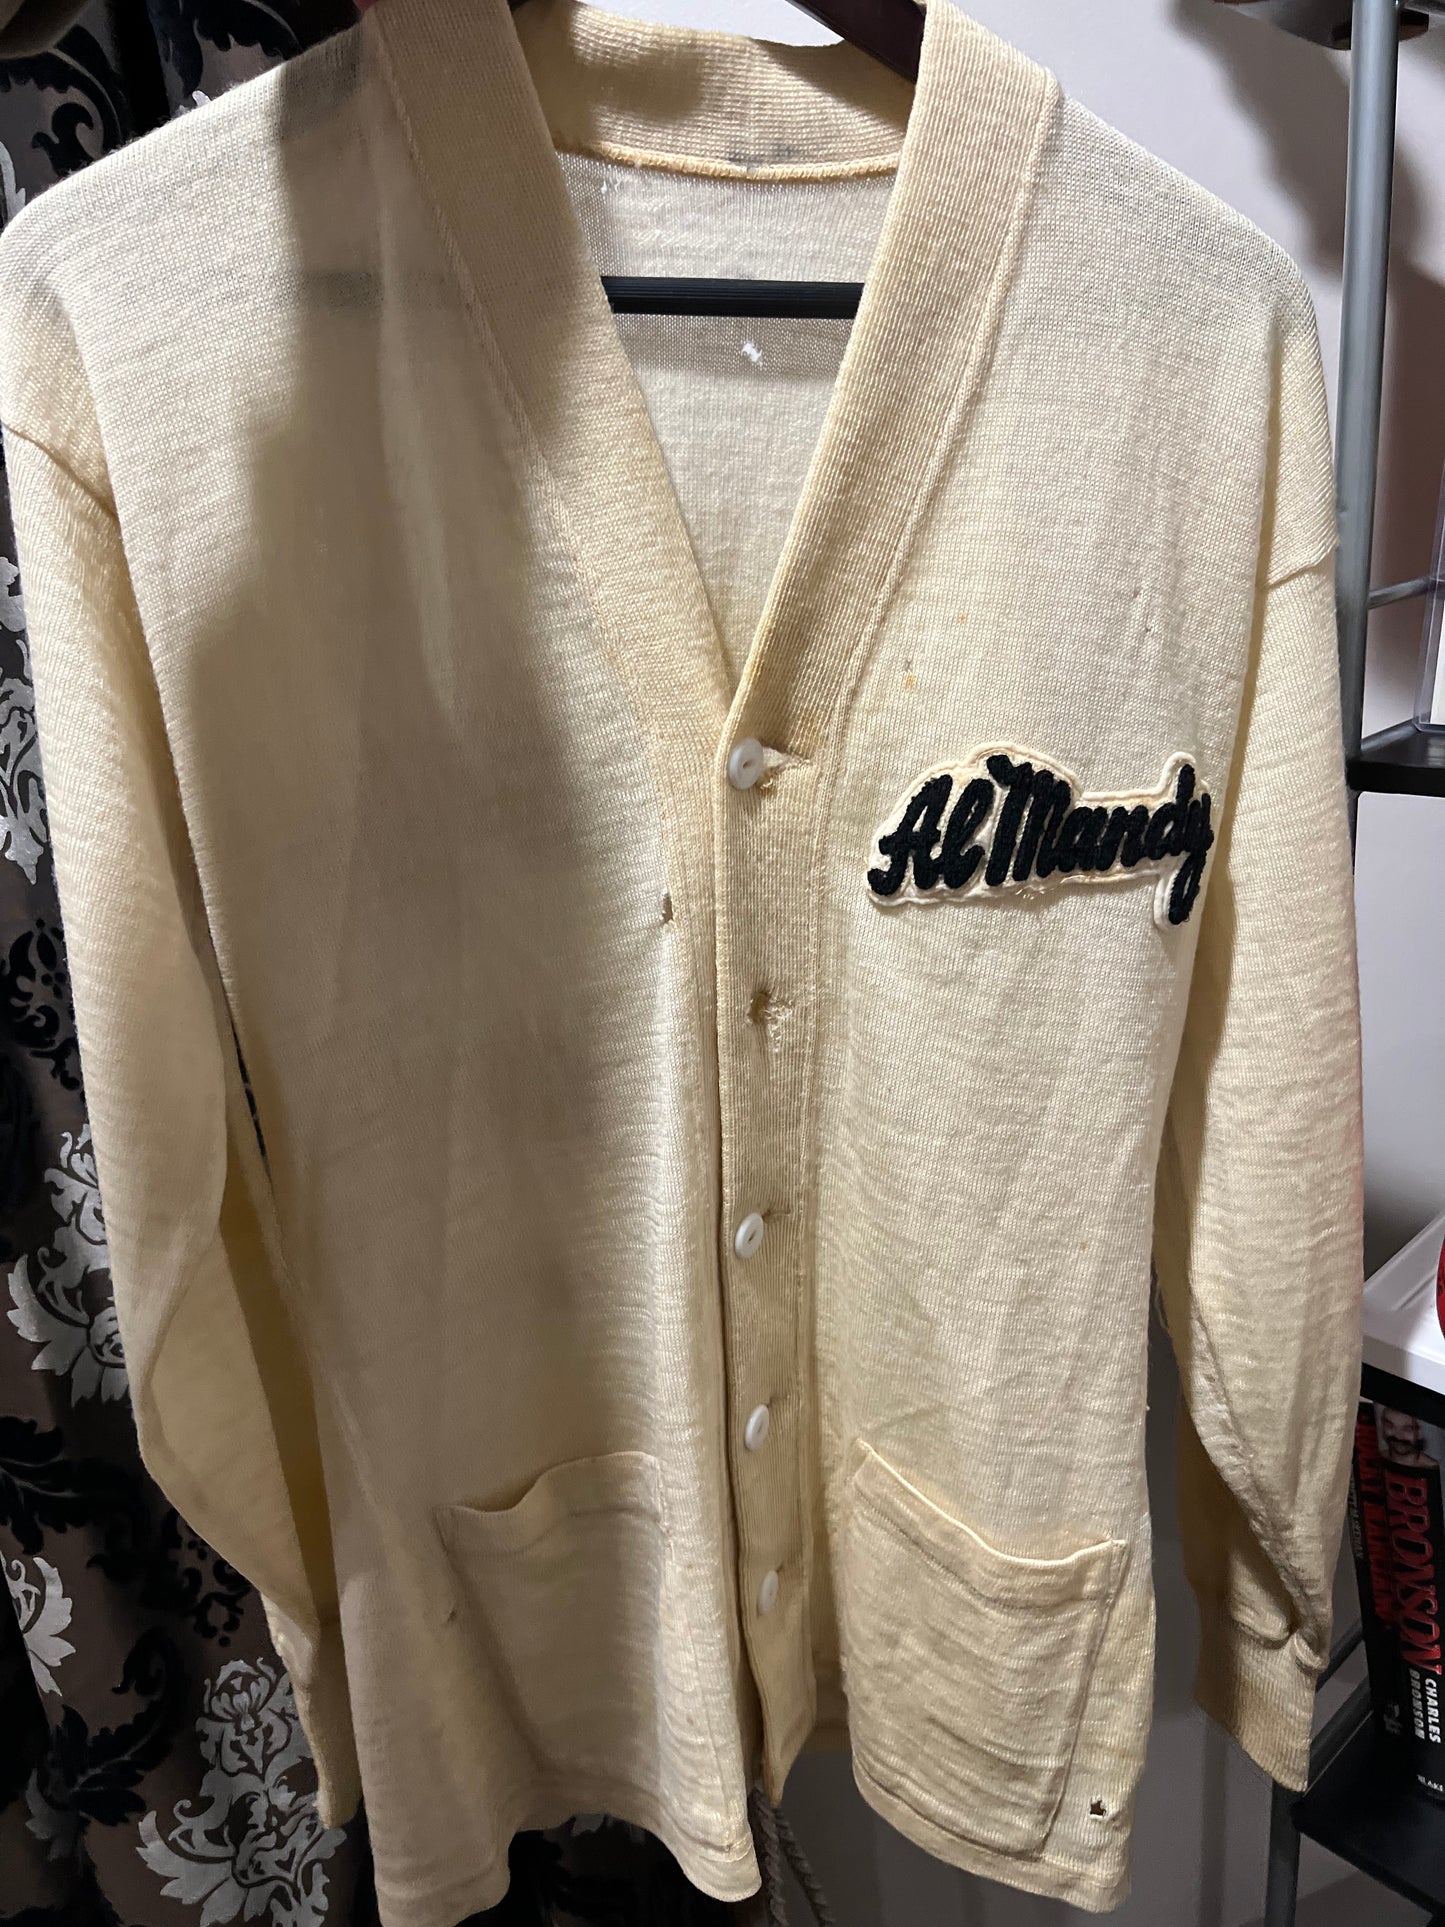 Rocky Marciano Cornermans sweater from 1950s Al Mandy photo match Rare!!!